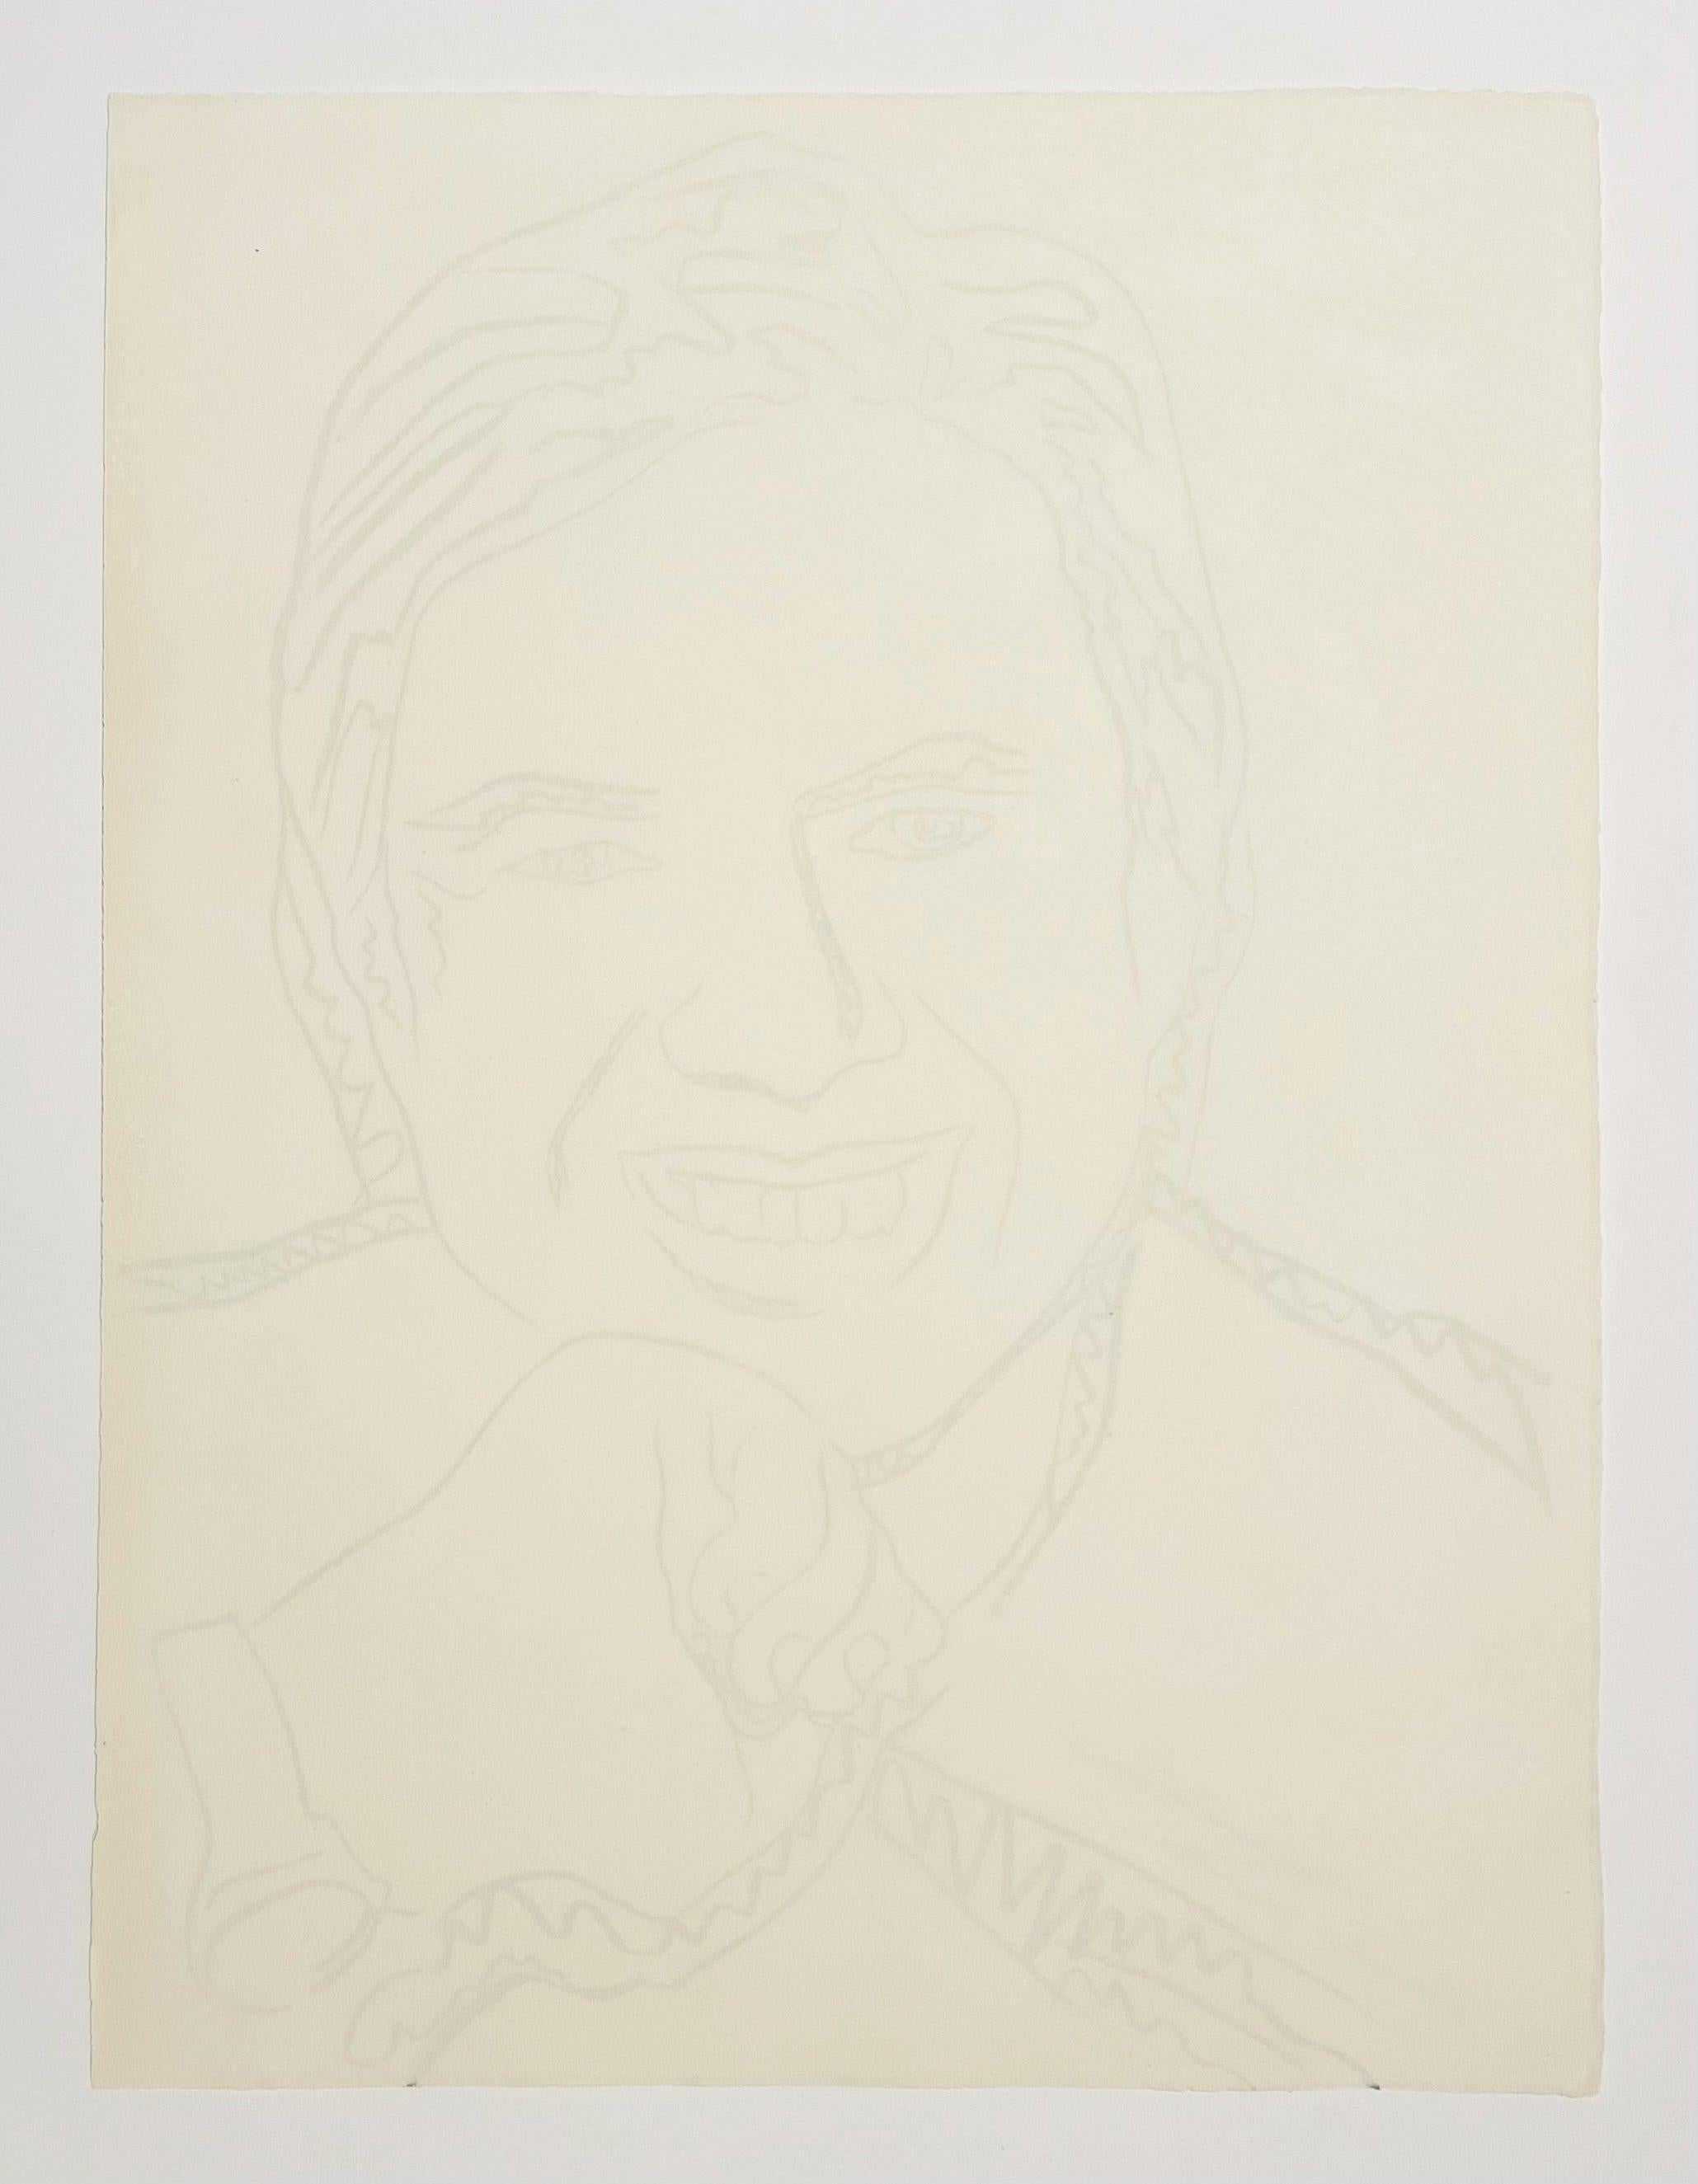 Artist: Andy Warhol
Title: Jimmy Carter III
Portfolio: Inaugural Impressions
Medium: Screenprint on J. Green paper
Date: 1977
Edition: 51/100
Frame Size: 36 1/2